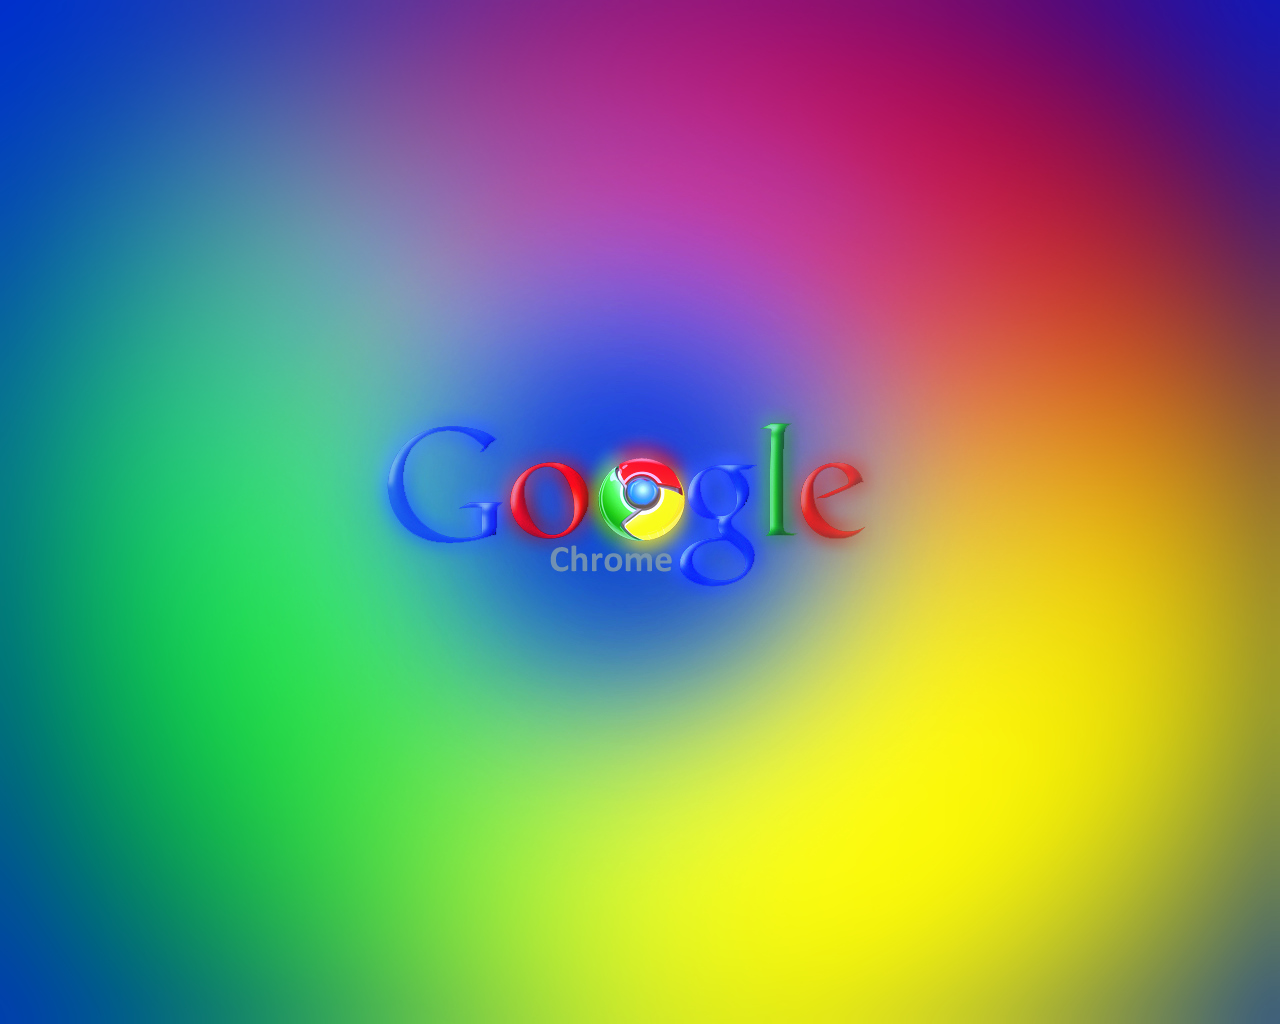 Top Google Chrome Wallpaper